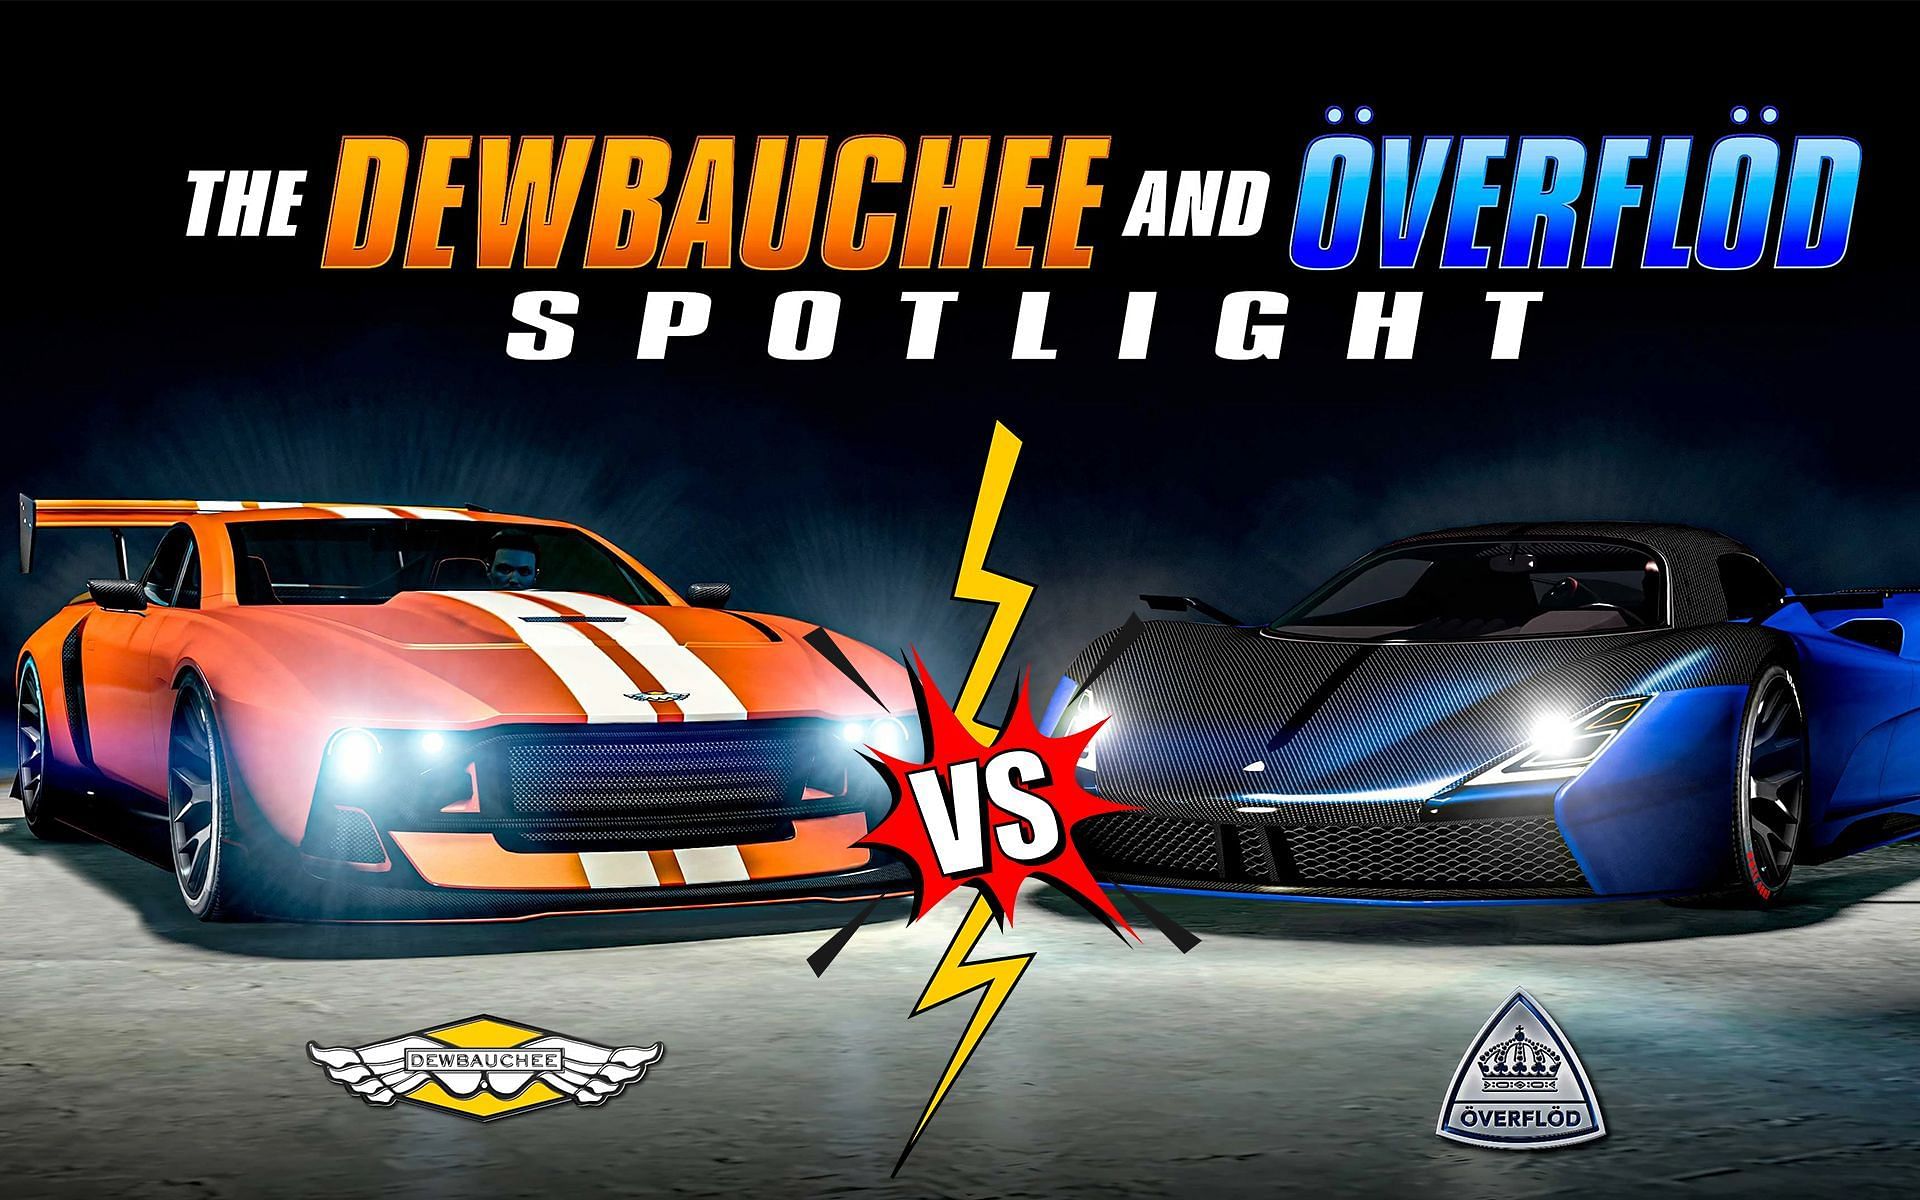 The GTA Online weekly update features many Dewbauchee and Overflod cars (Image via Sportskeeda)